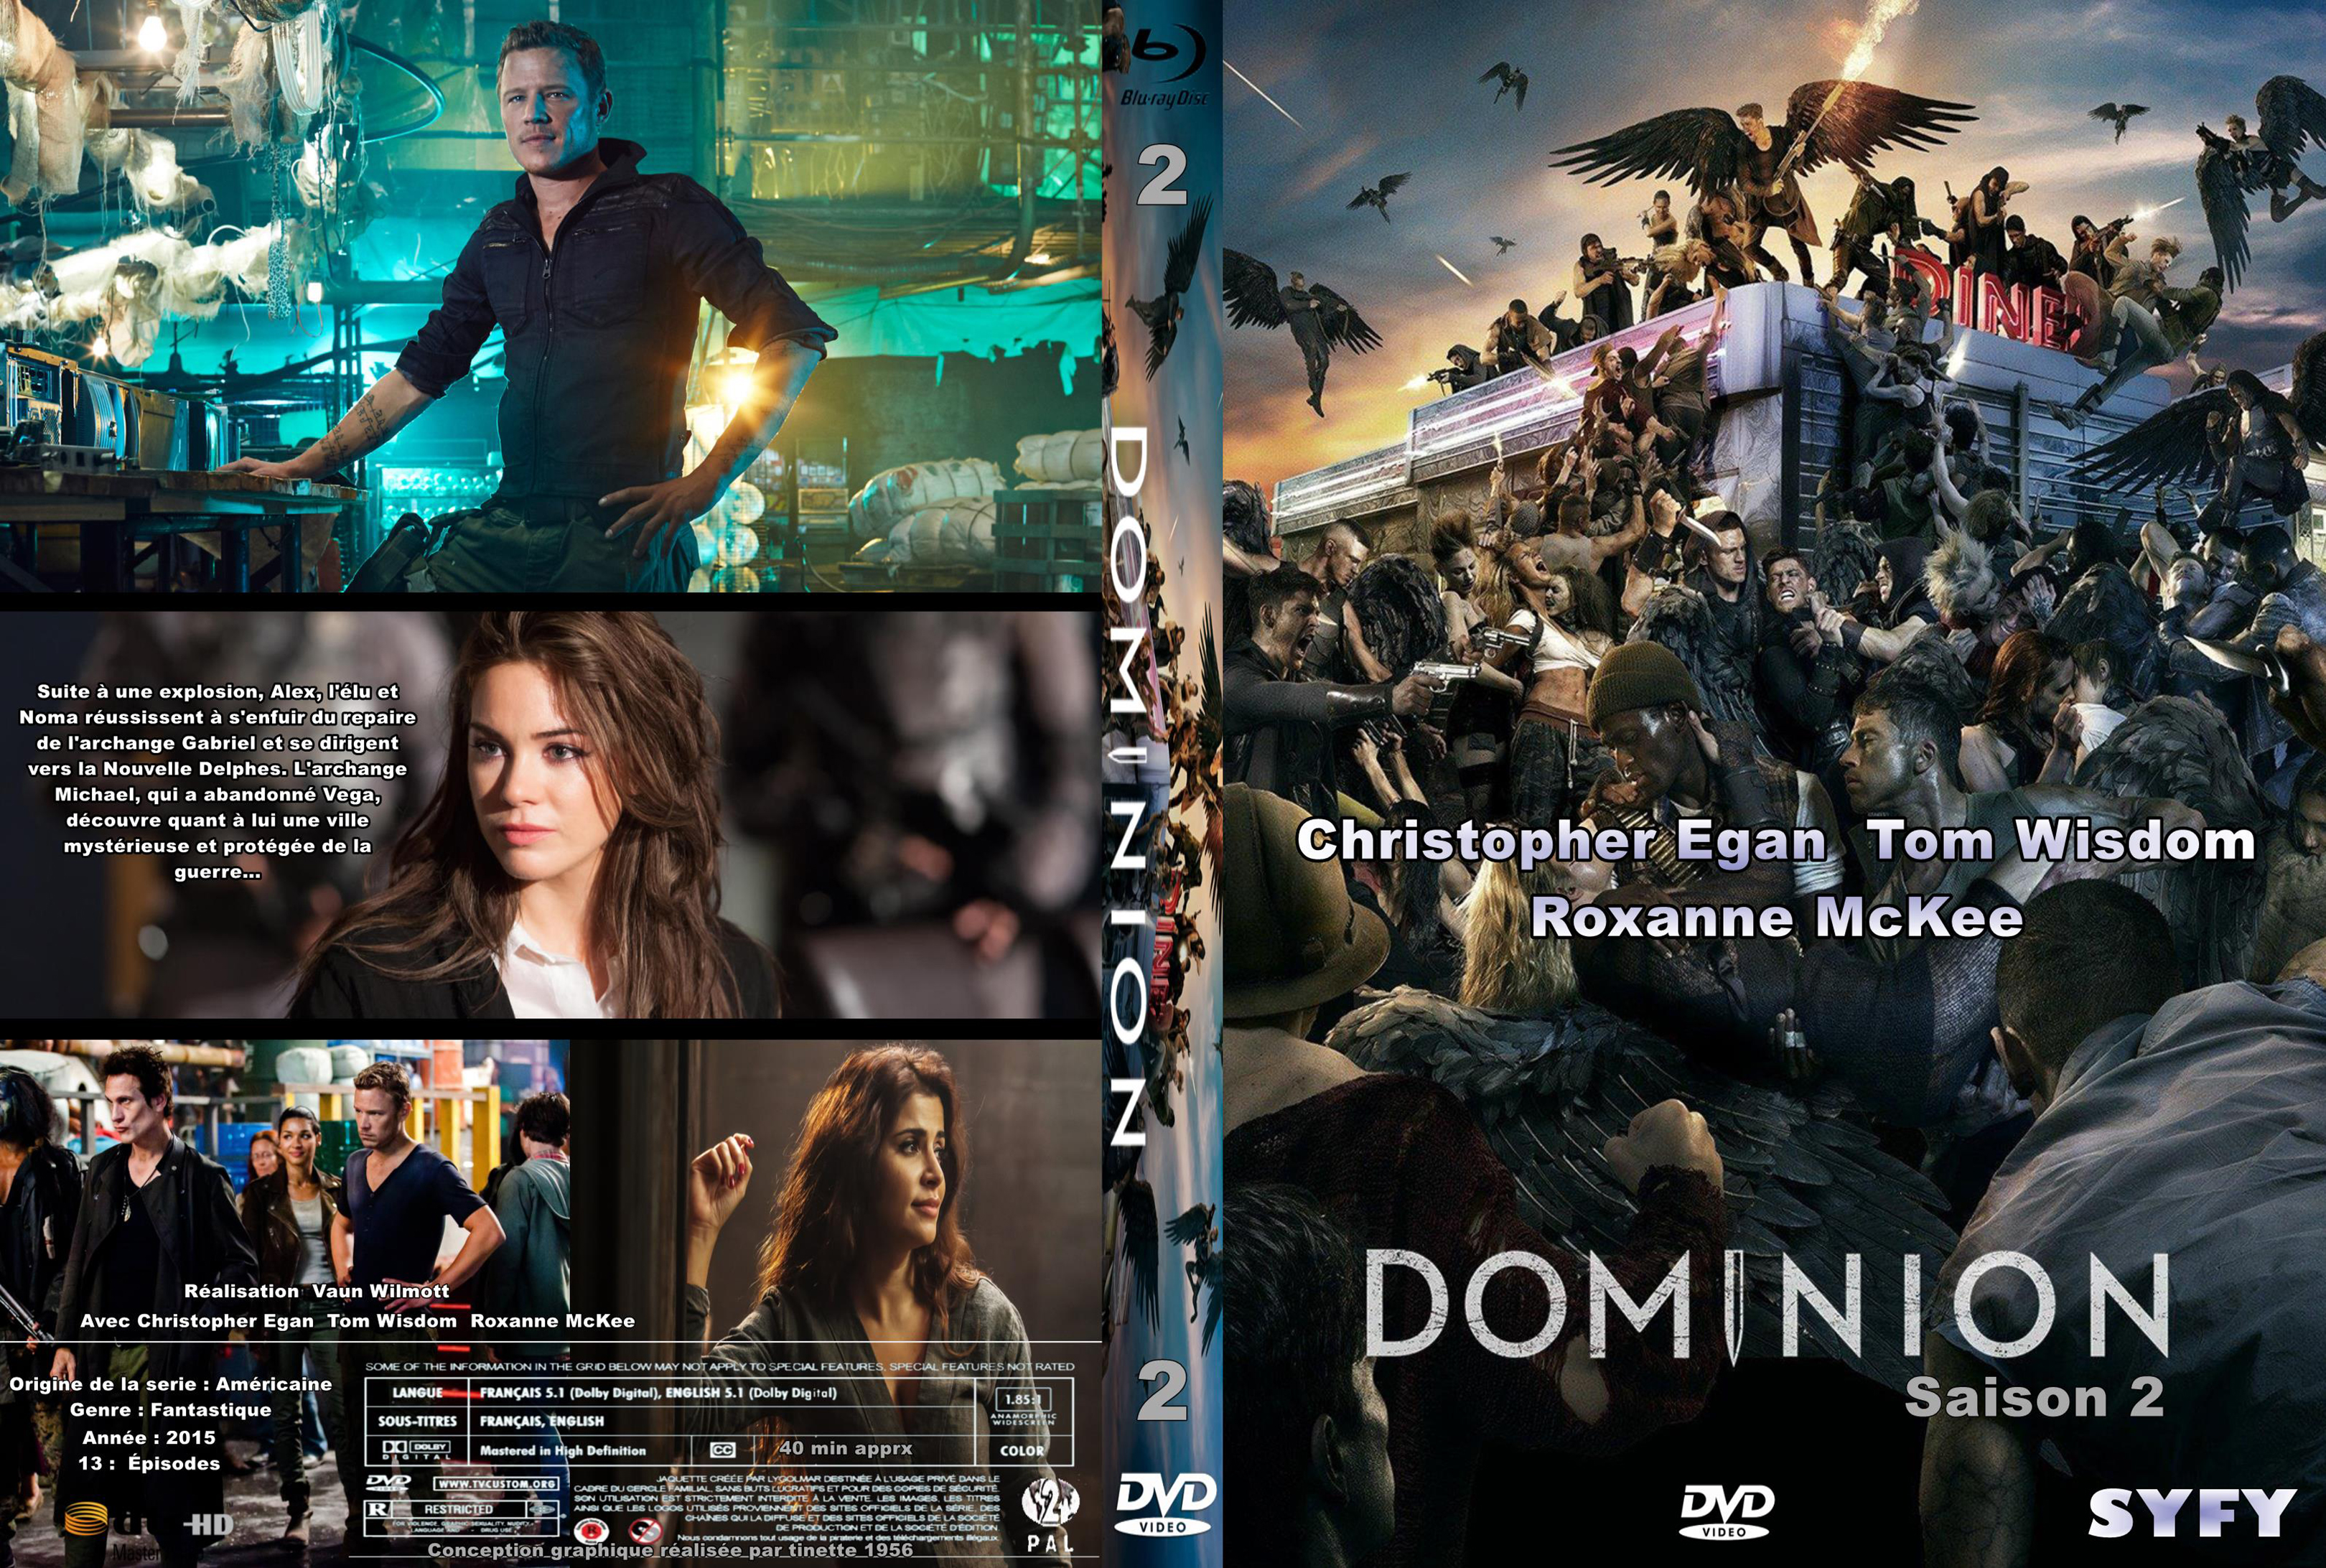 Jaquette DVD Dominion saison 2 custom